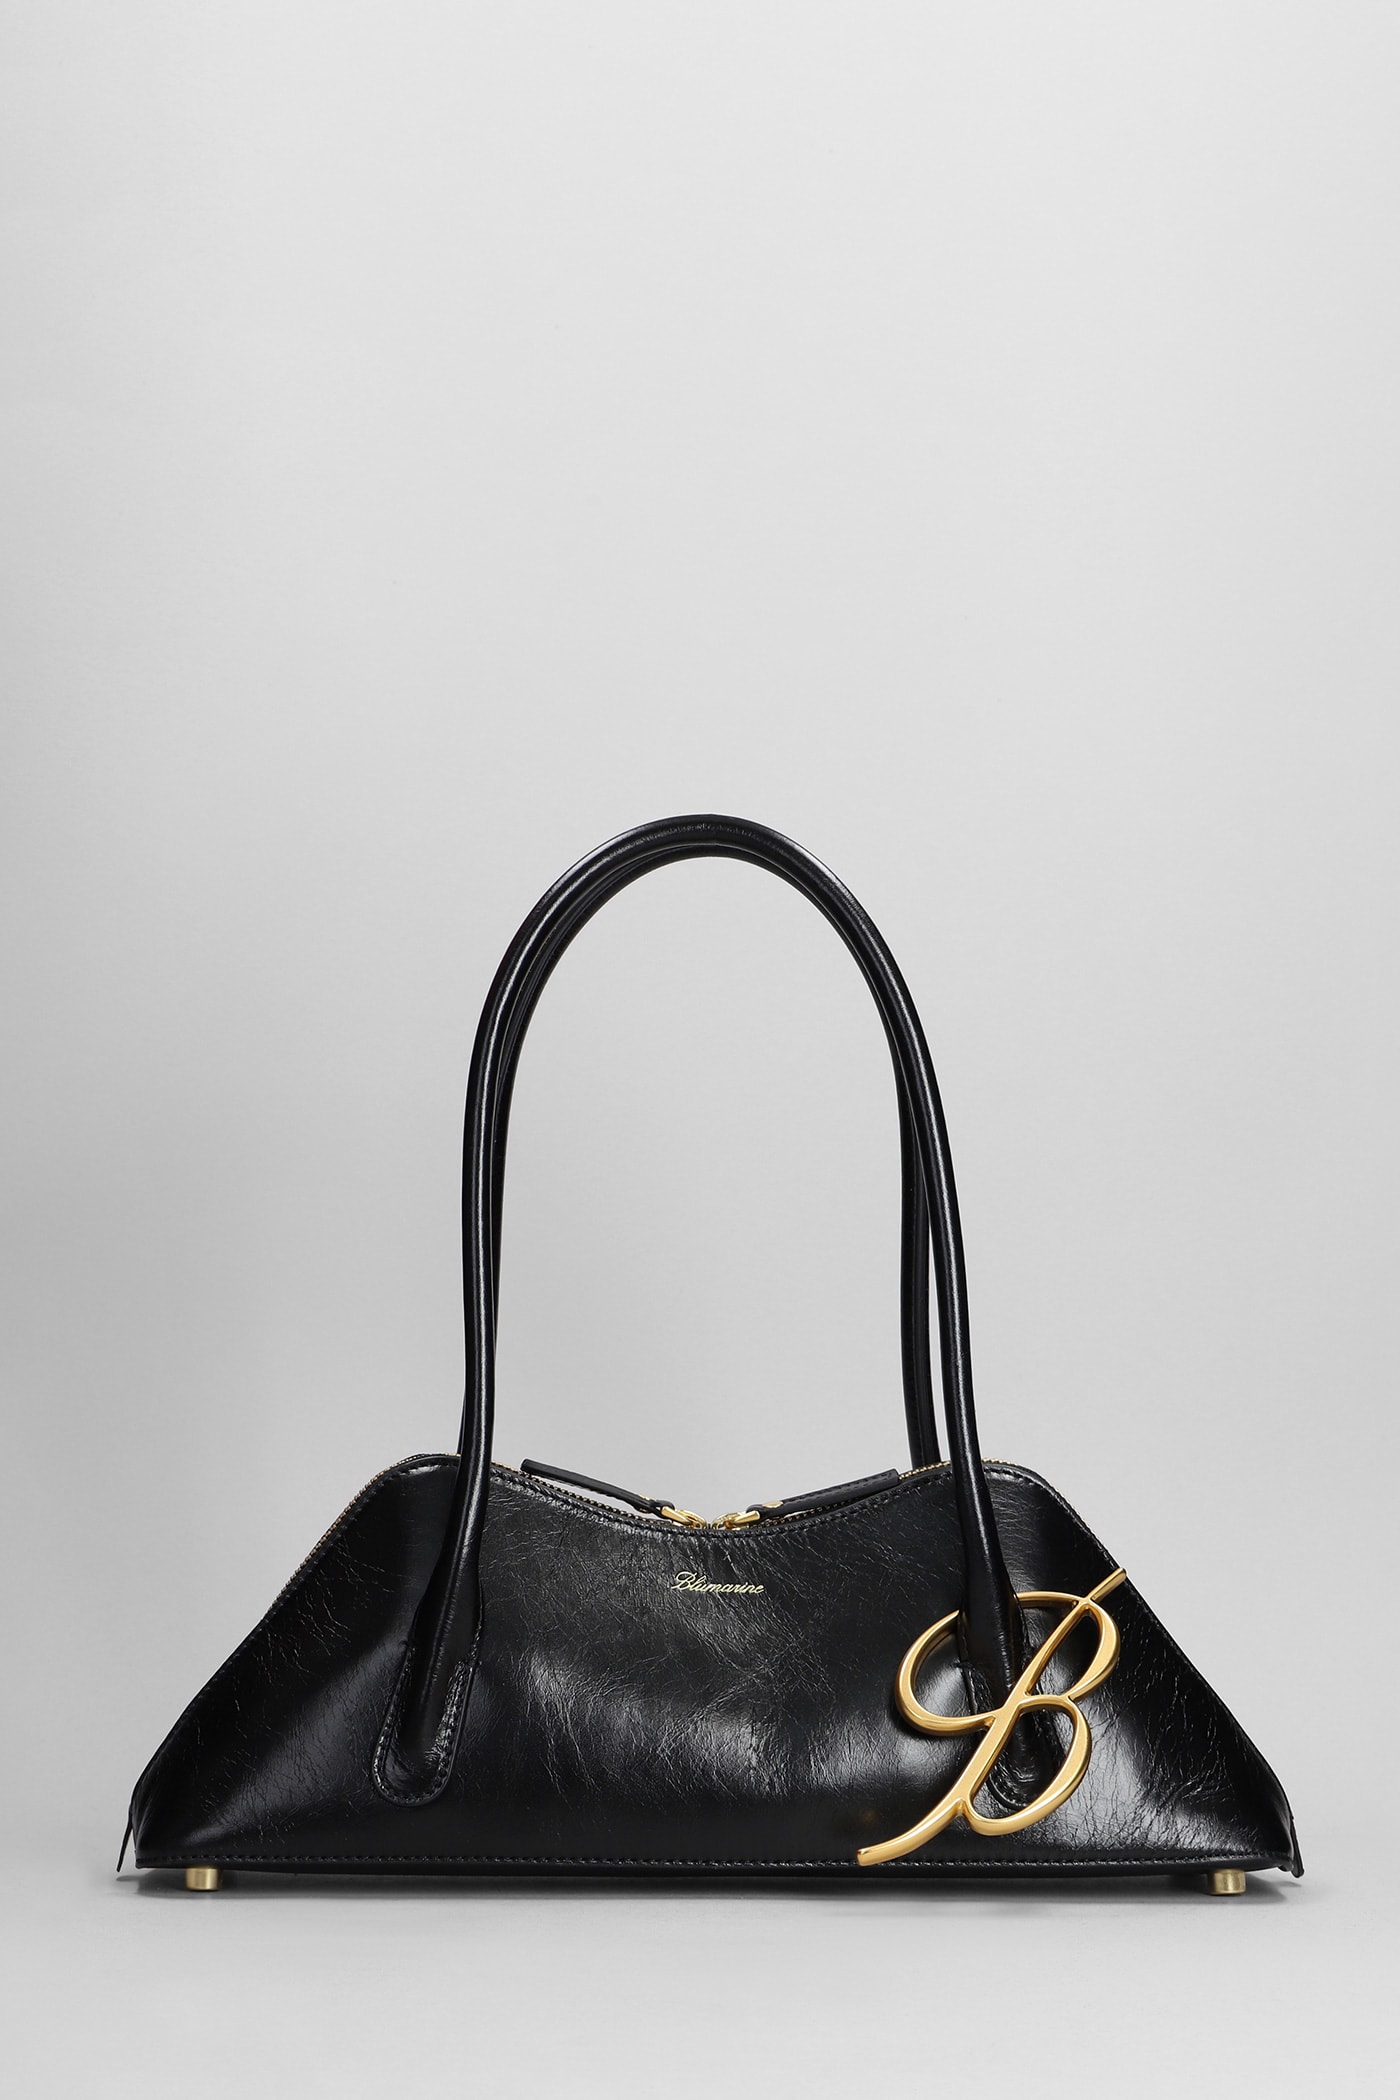 Blumarine Hand Bag In Black Leather